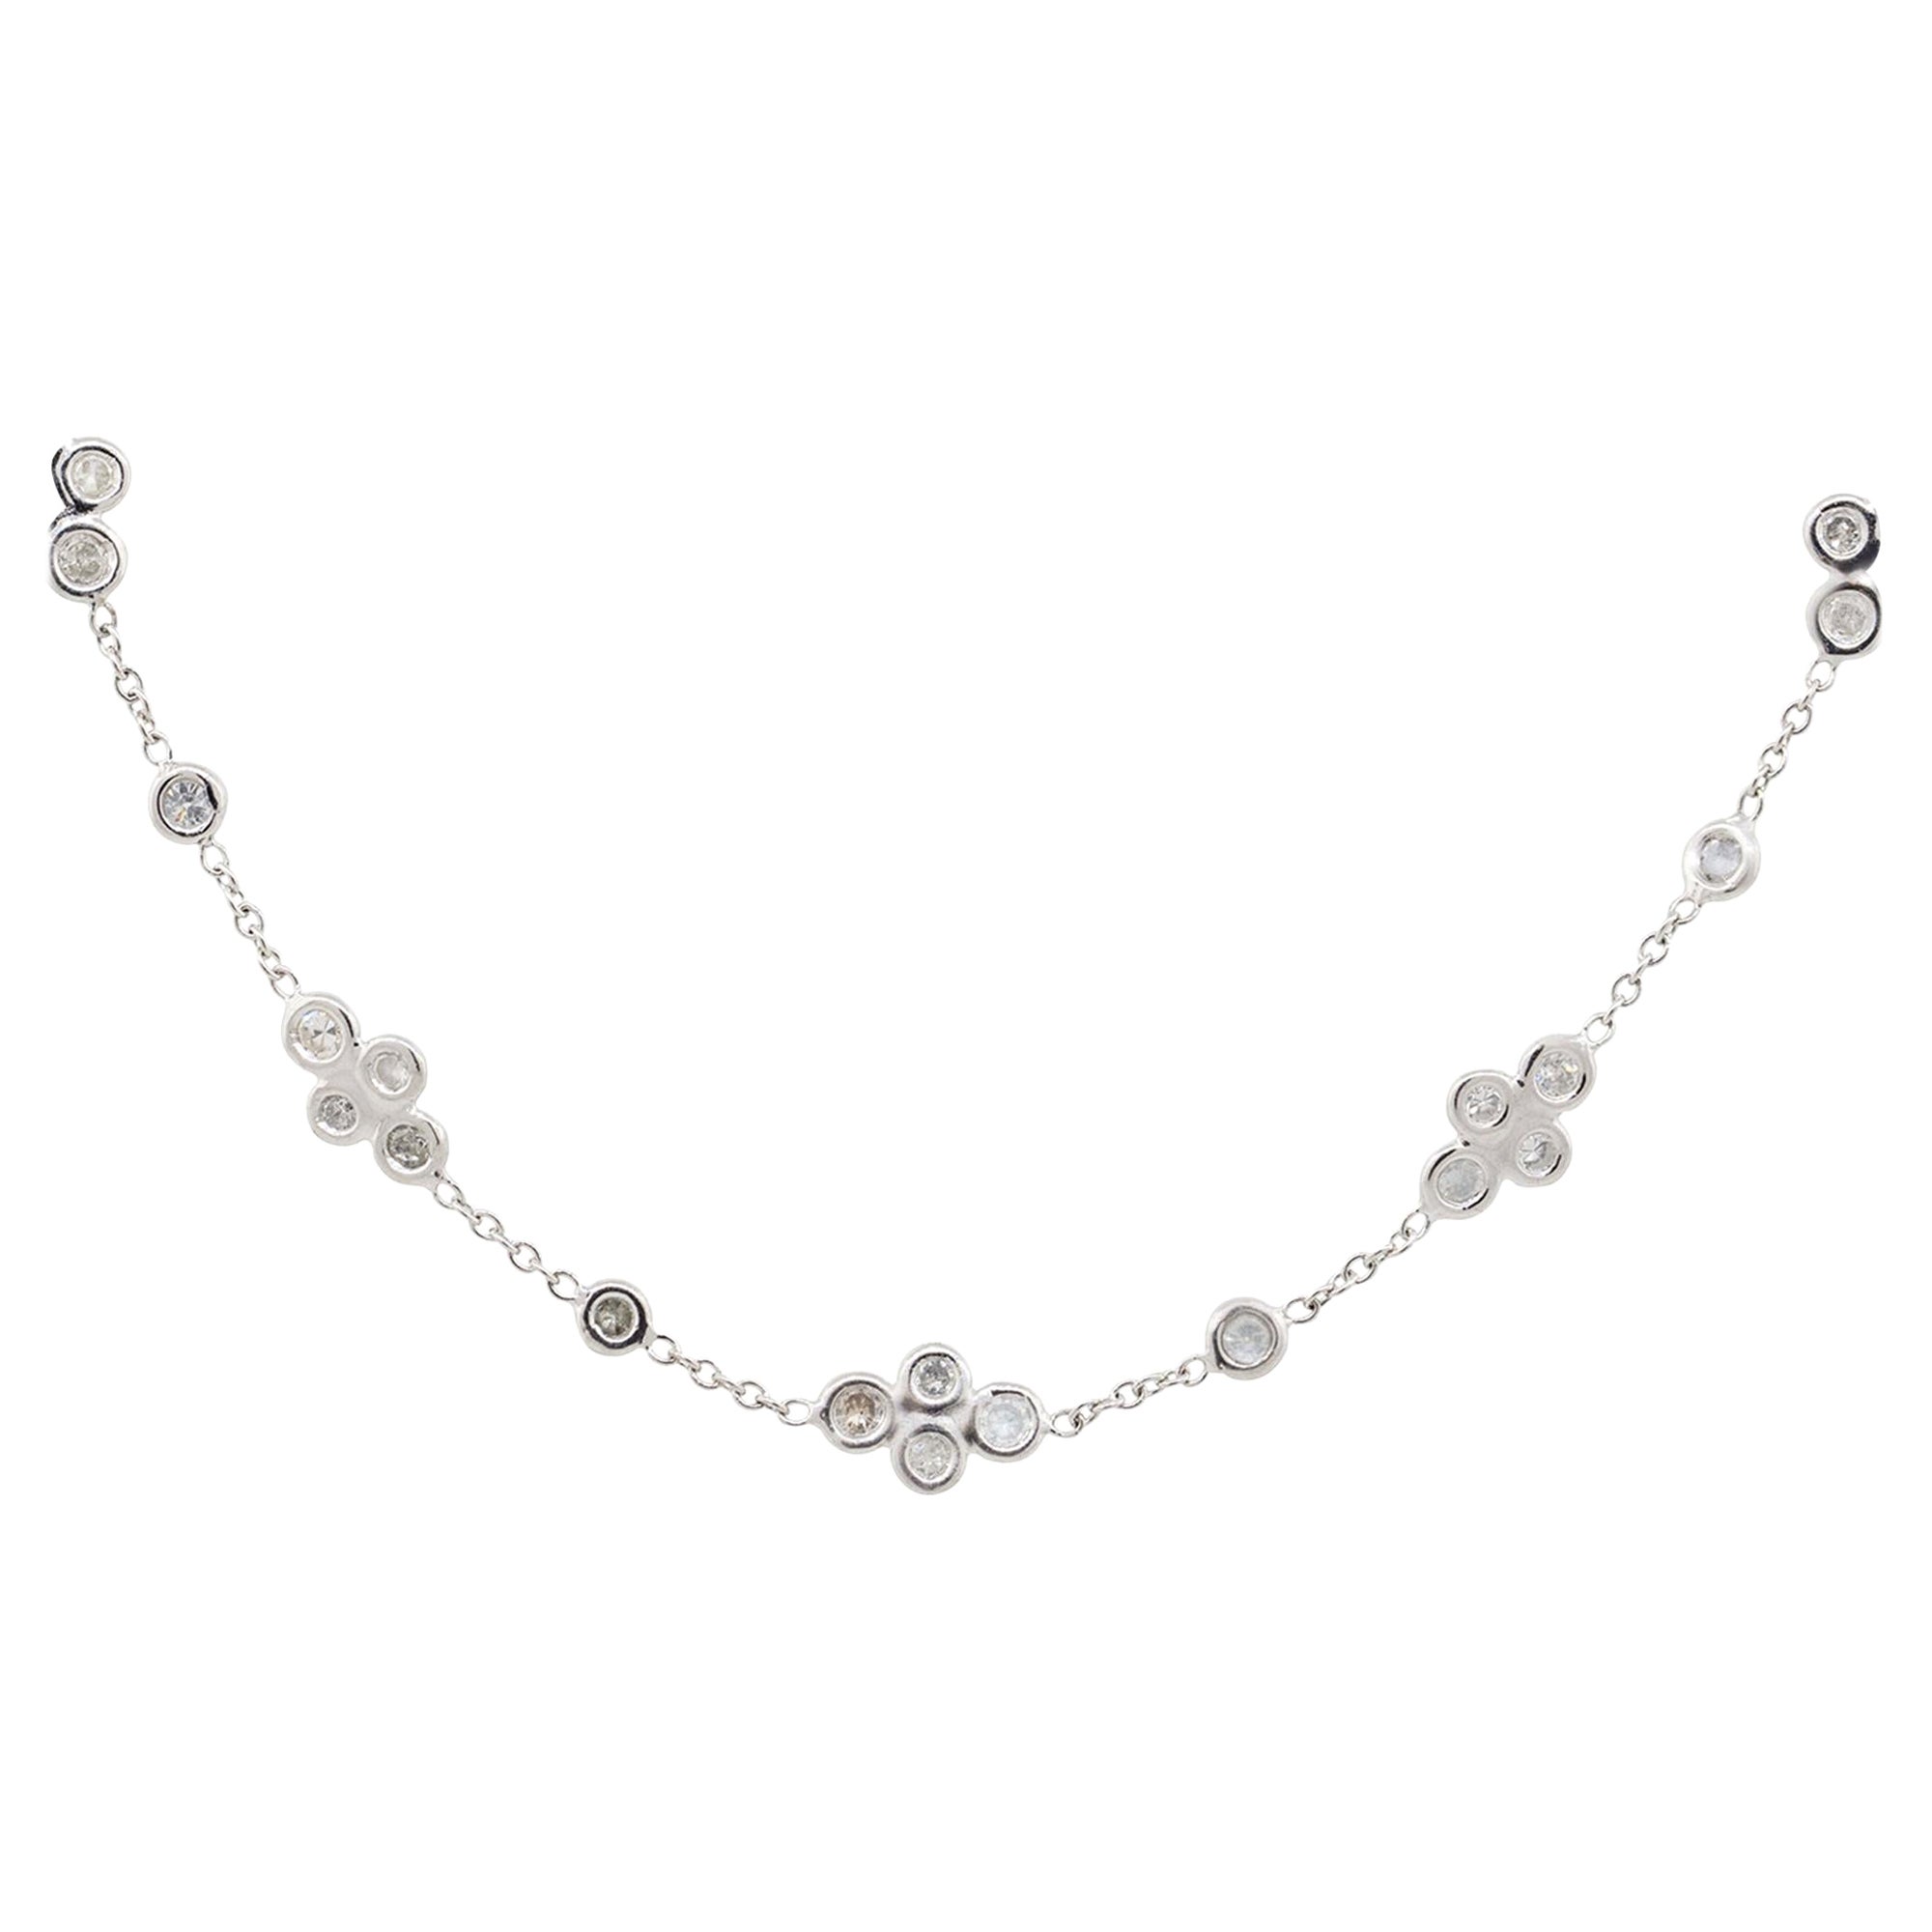 1.9 Carat Round Diamond Floral Necklace 18 Karat in Stock For Sale